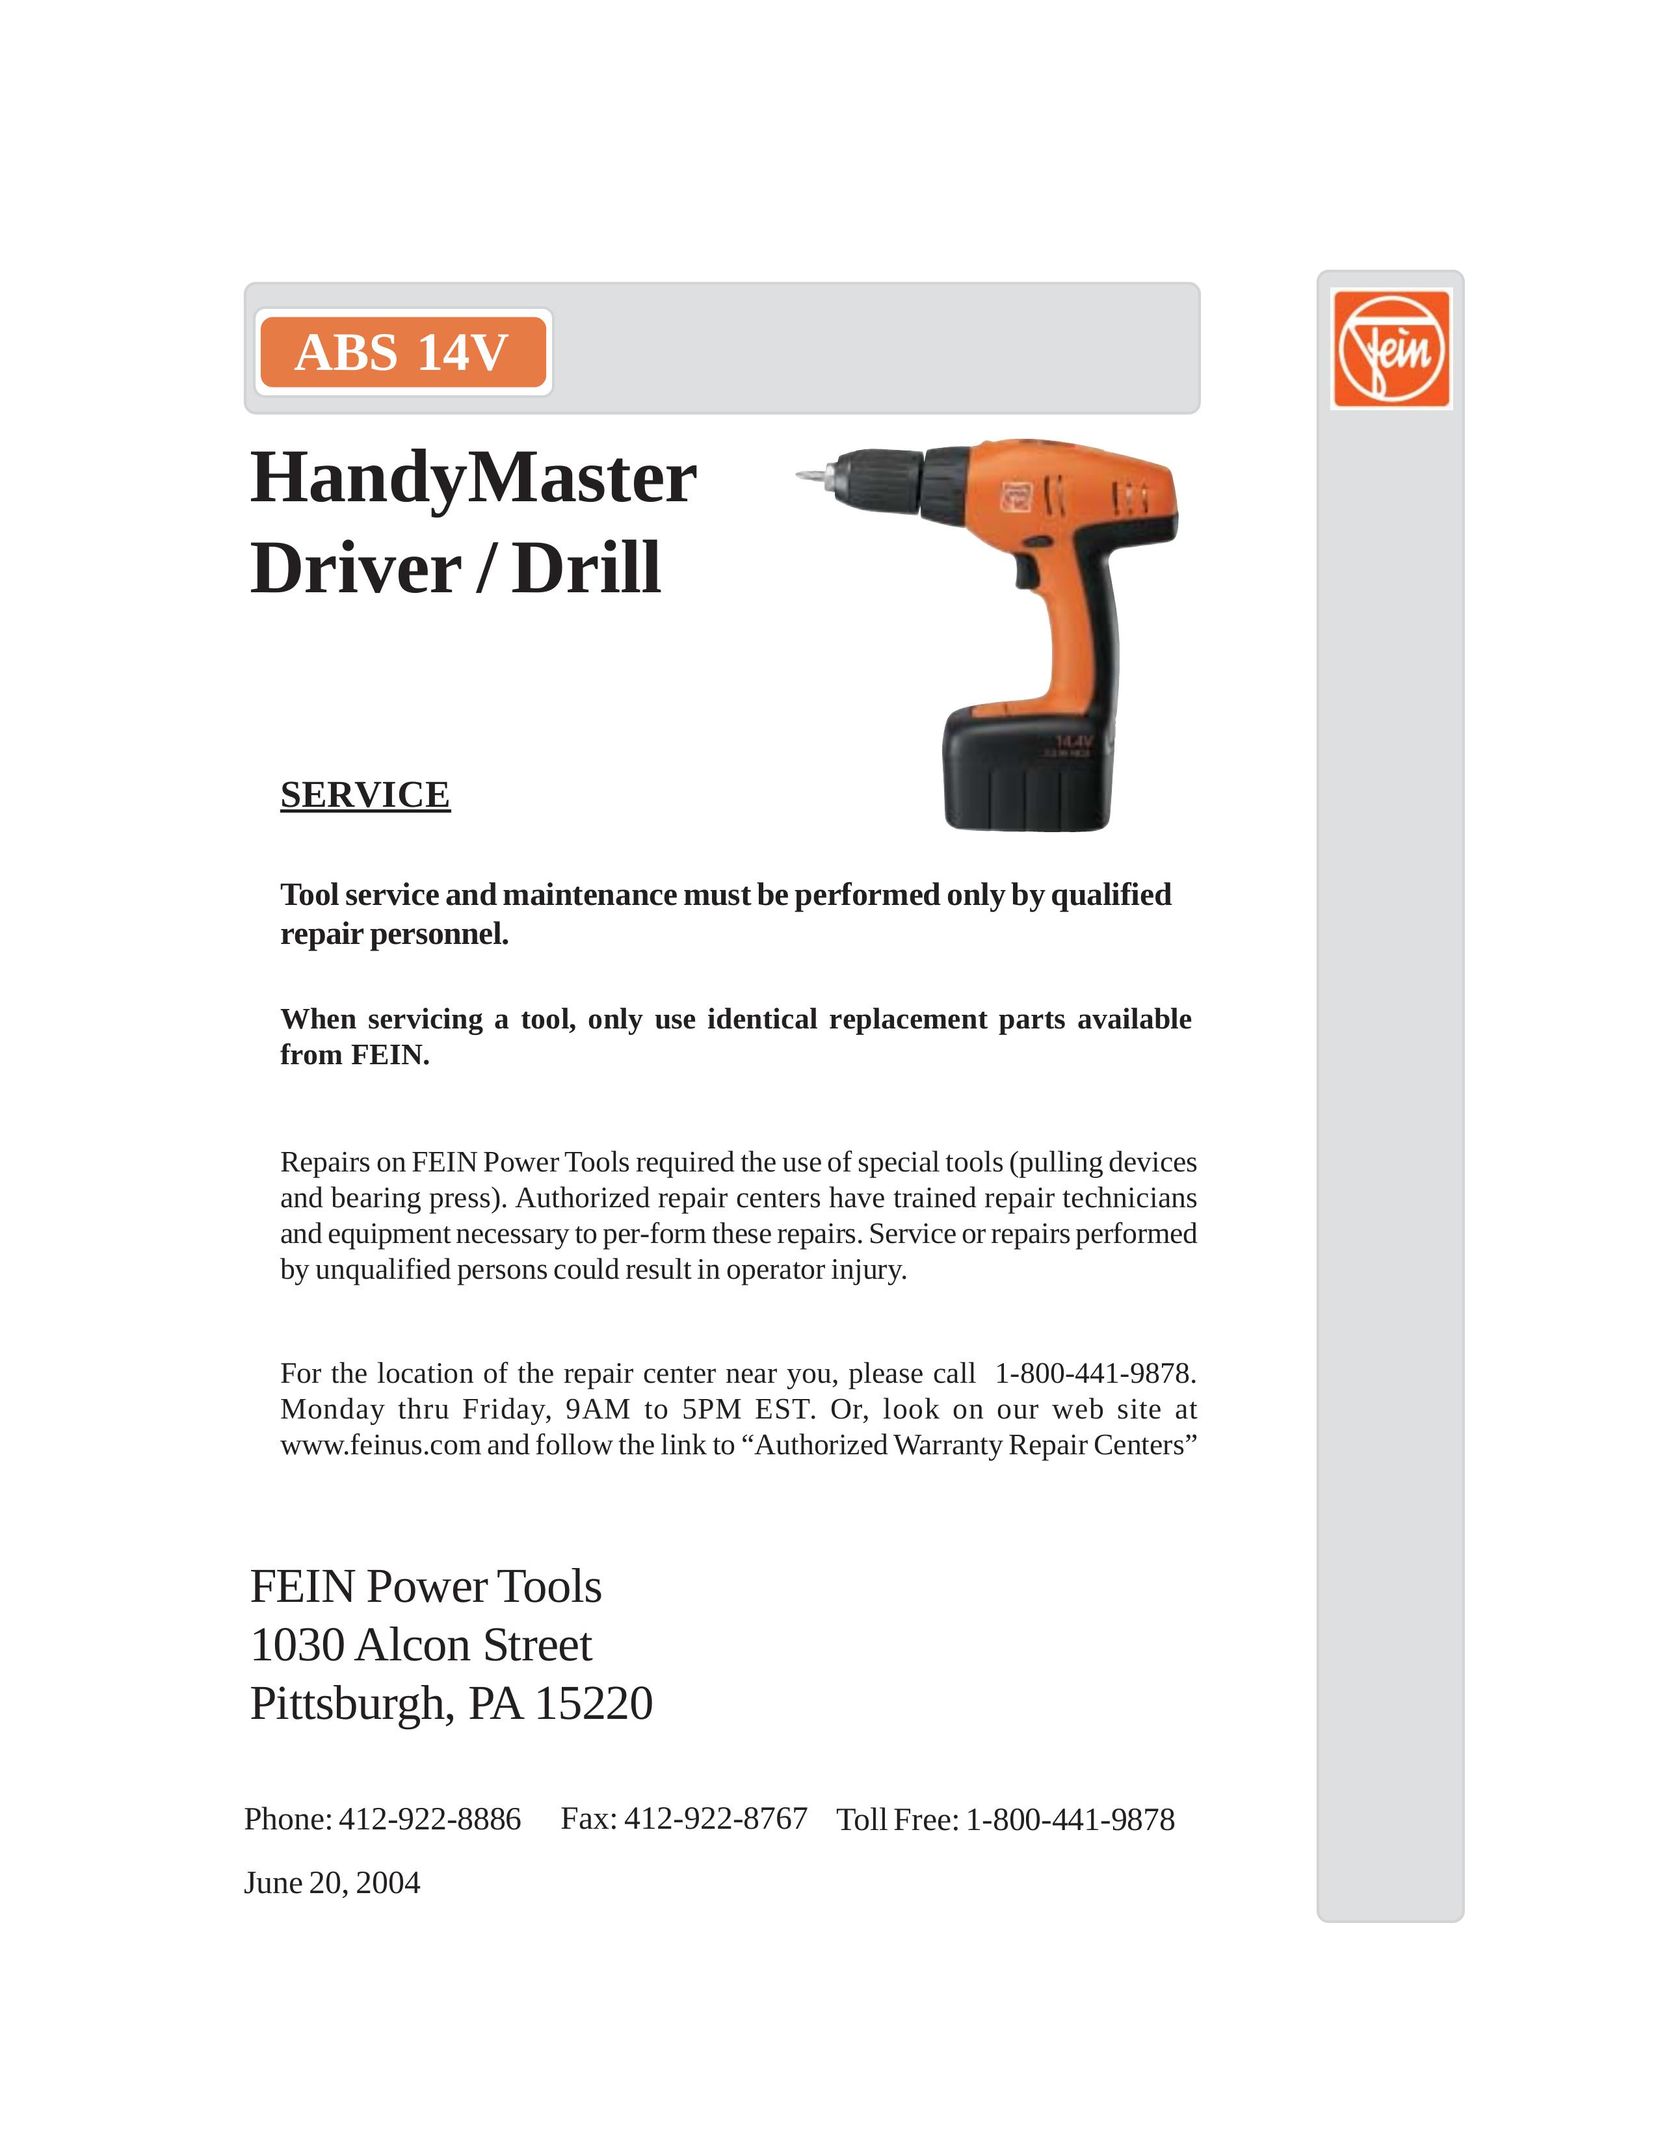 FEIN Power Tools ABS 14V Drill User Manual